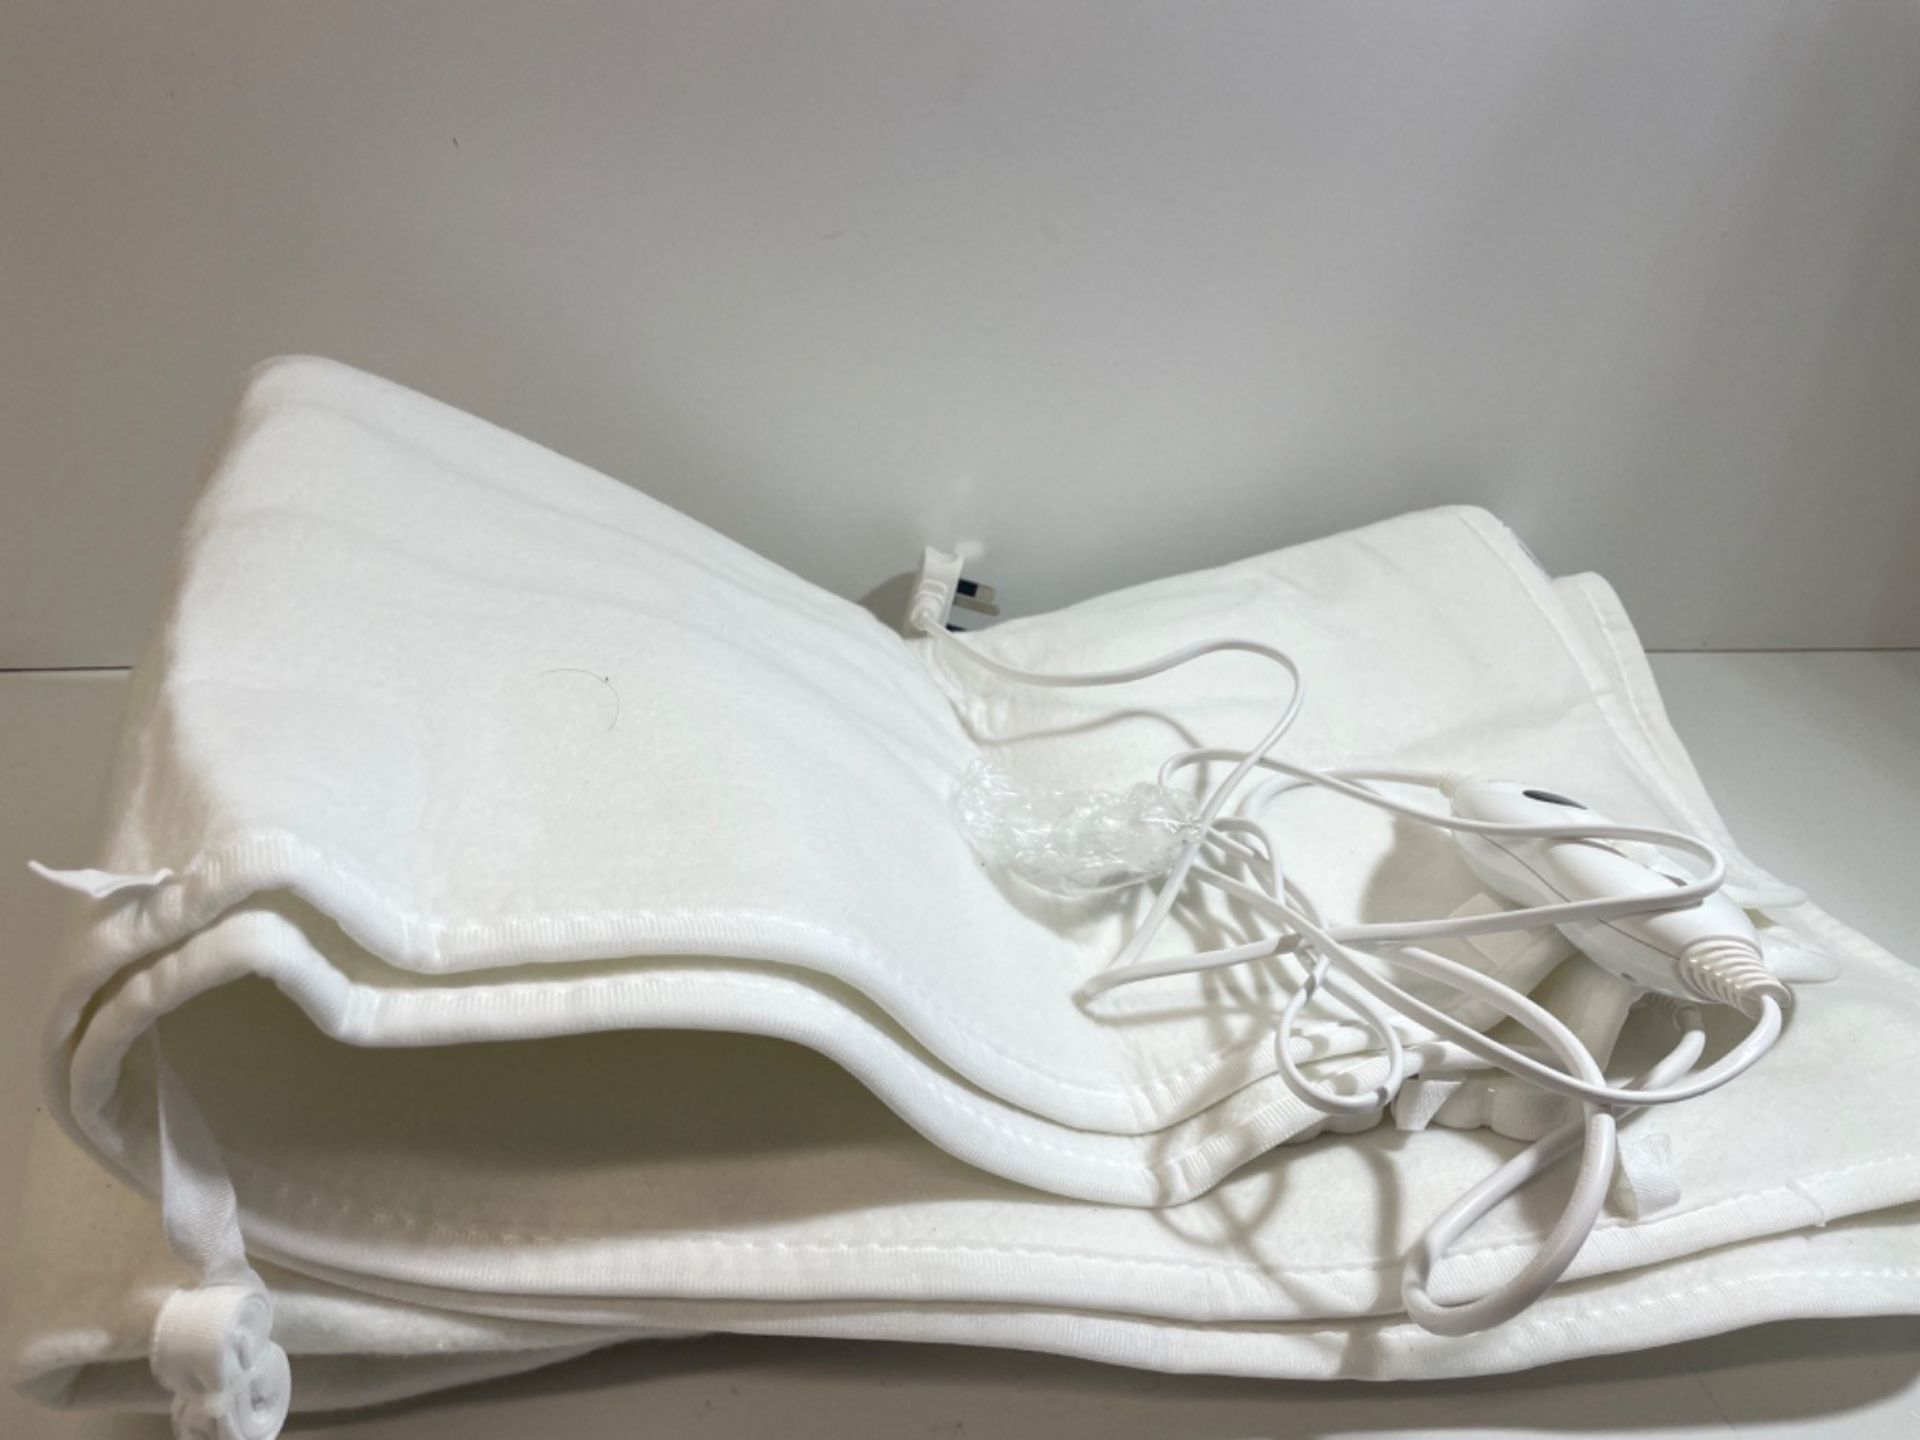 Cozytek Double Polyester Electric Blanket Size Detachable Control Underblanket 3 Heat Settings Wh... - Image 2 of 3